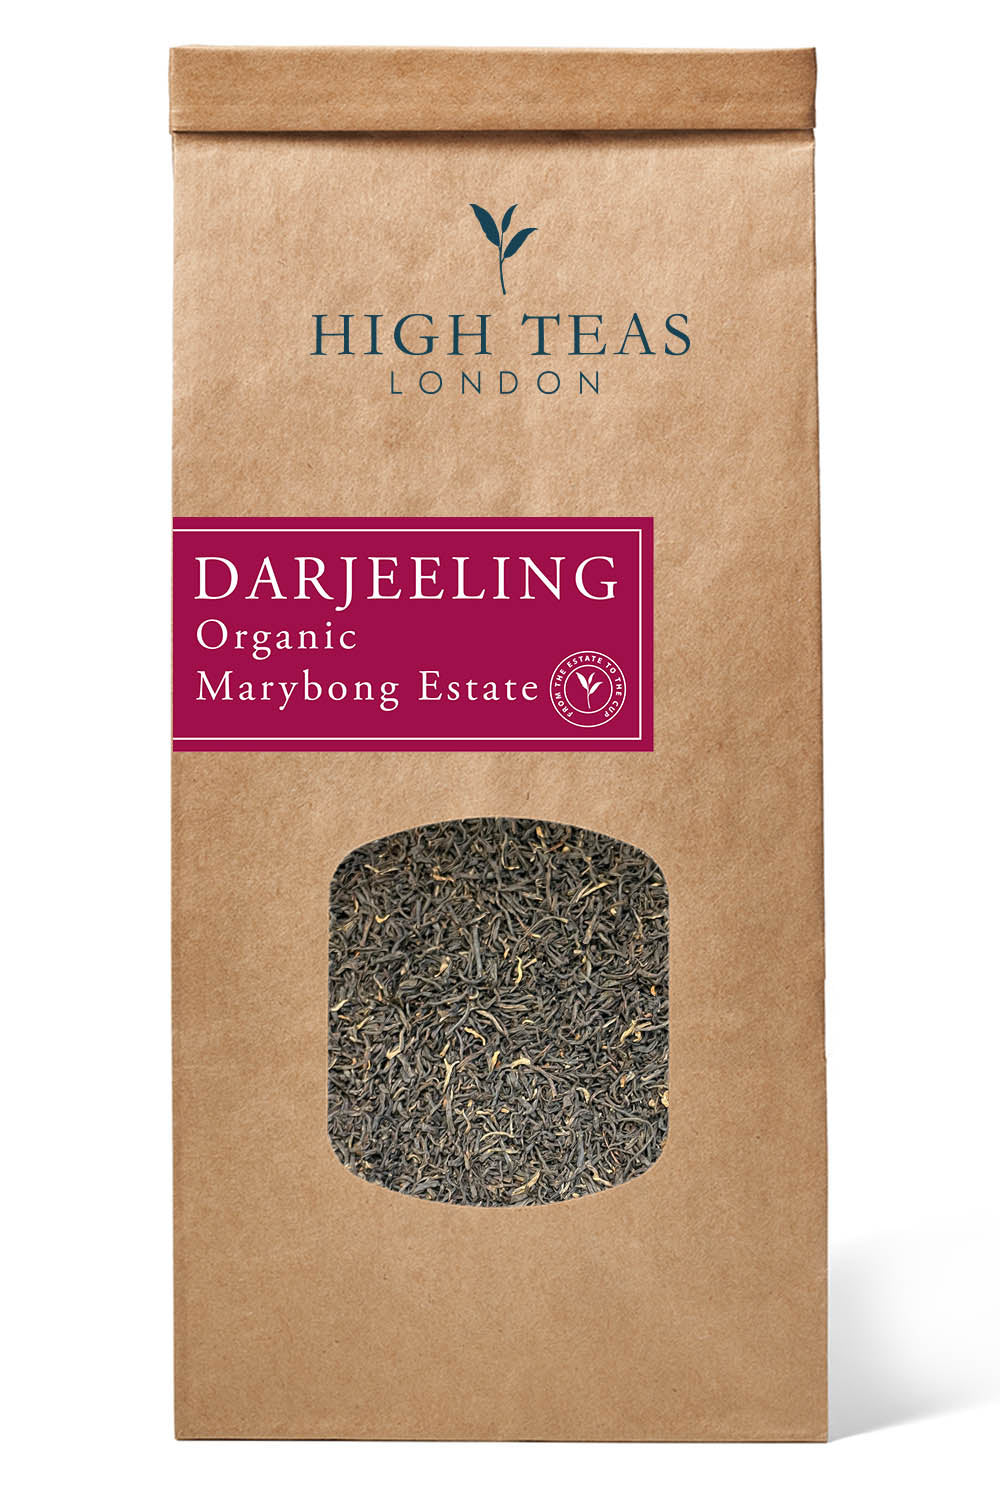 Darjeeling Organic Marybong Estate-250g-Loose Leaf Tea-High Teas